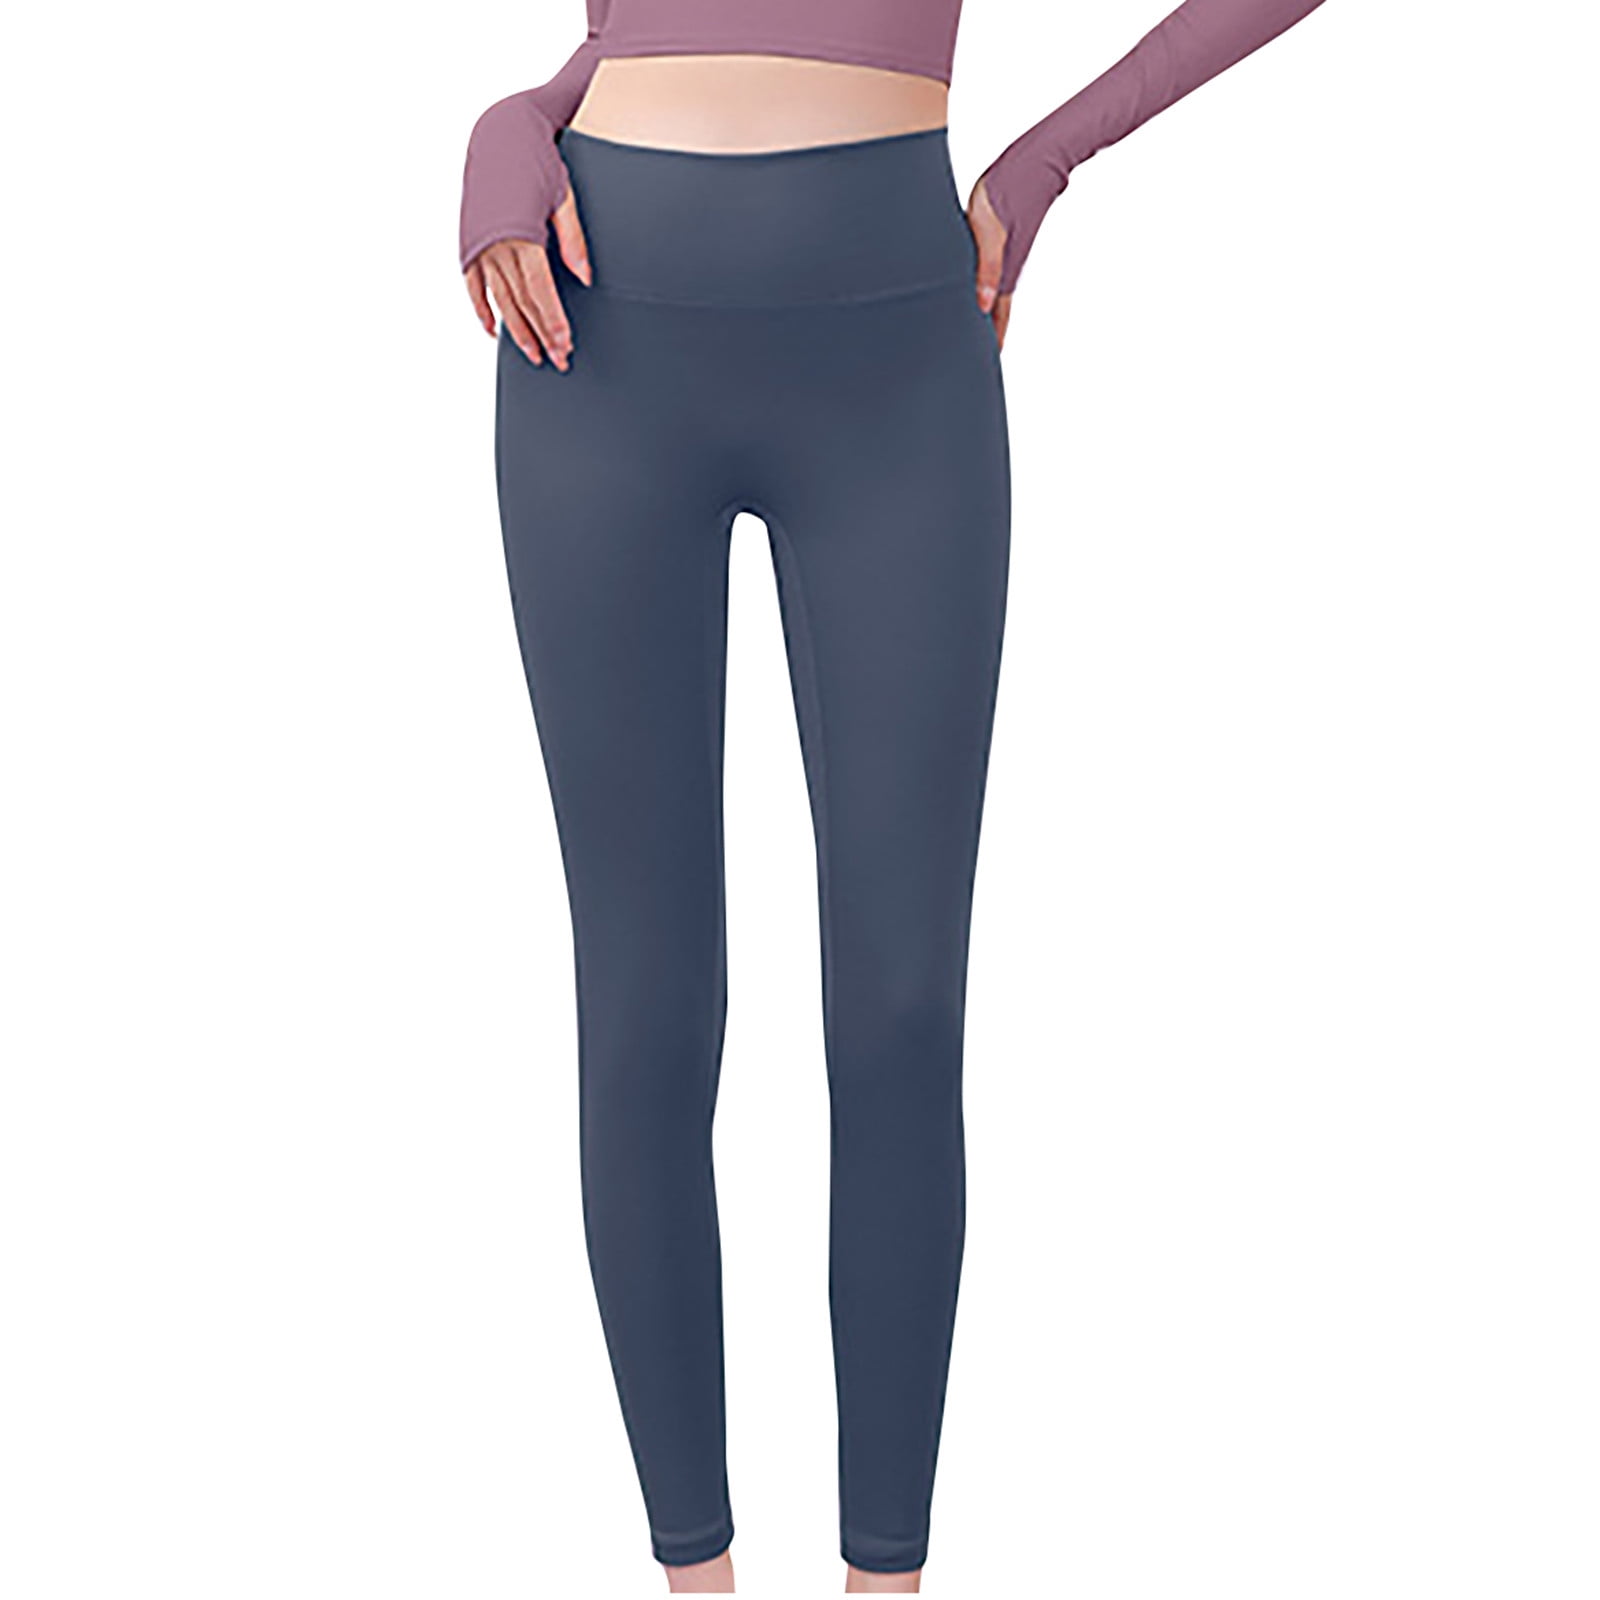 Penkiiy Yoga Pants Women's High Waist Solid Color Hip Lifting Exercise ...